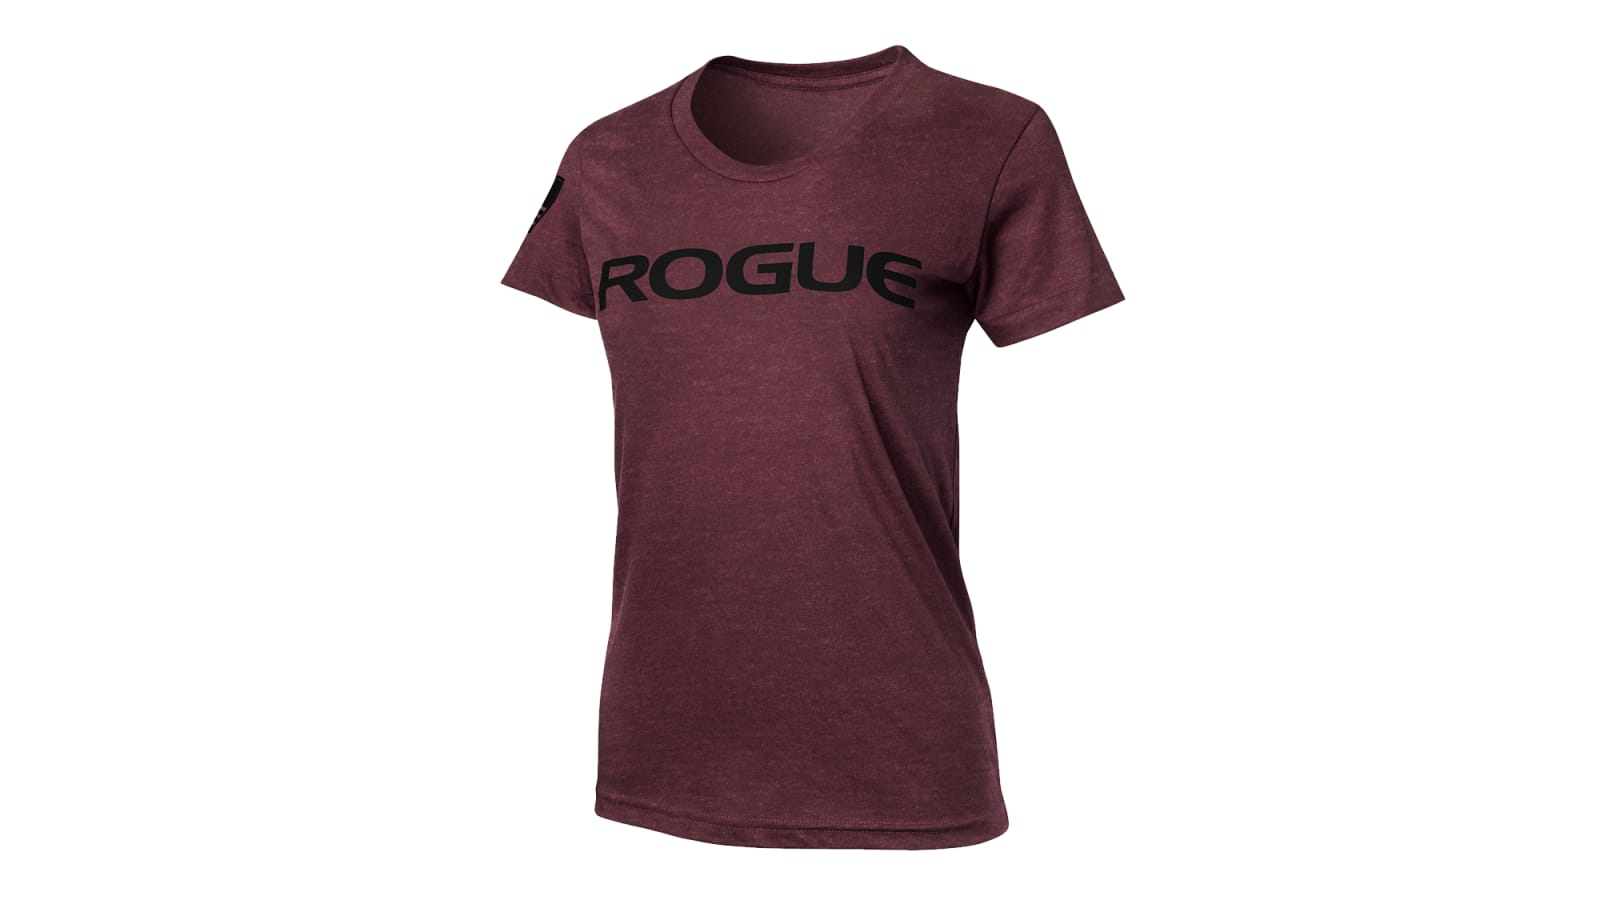 Rogue Women's Basic Shirt - Maroon / Black | Rogue Fitness APO